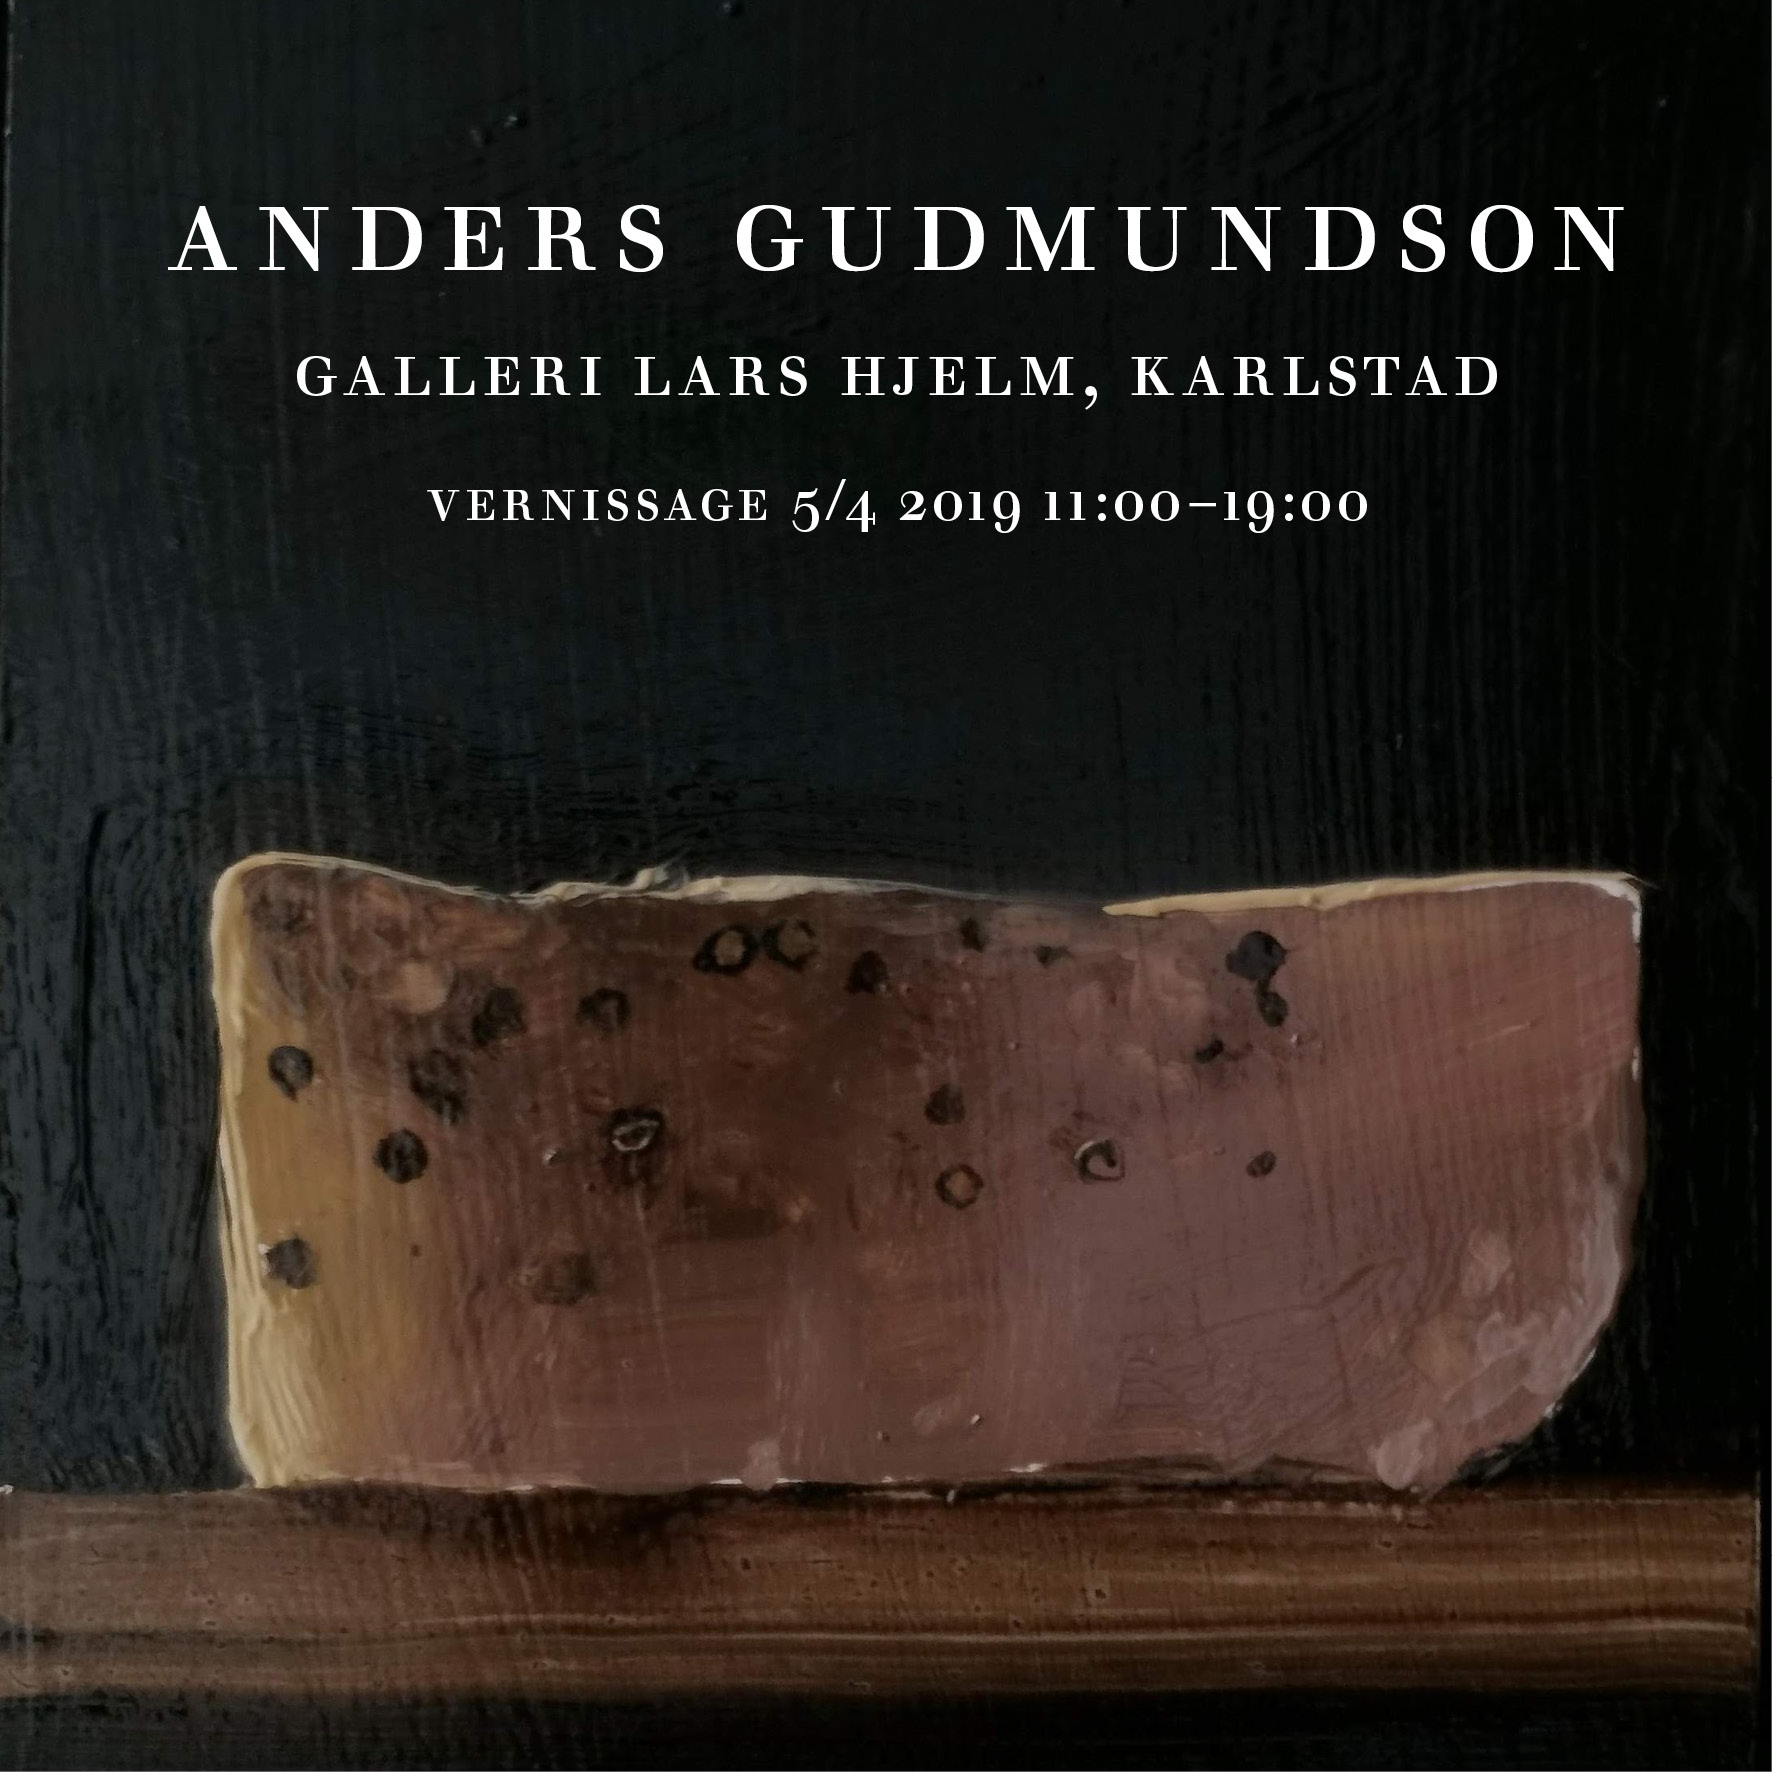 Vernissage hos Galleri Lars Hjelm